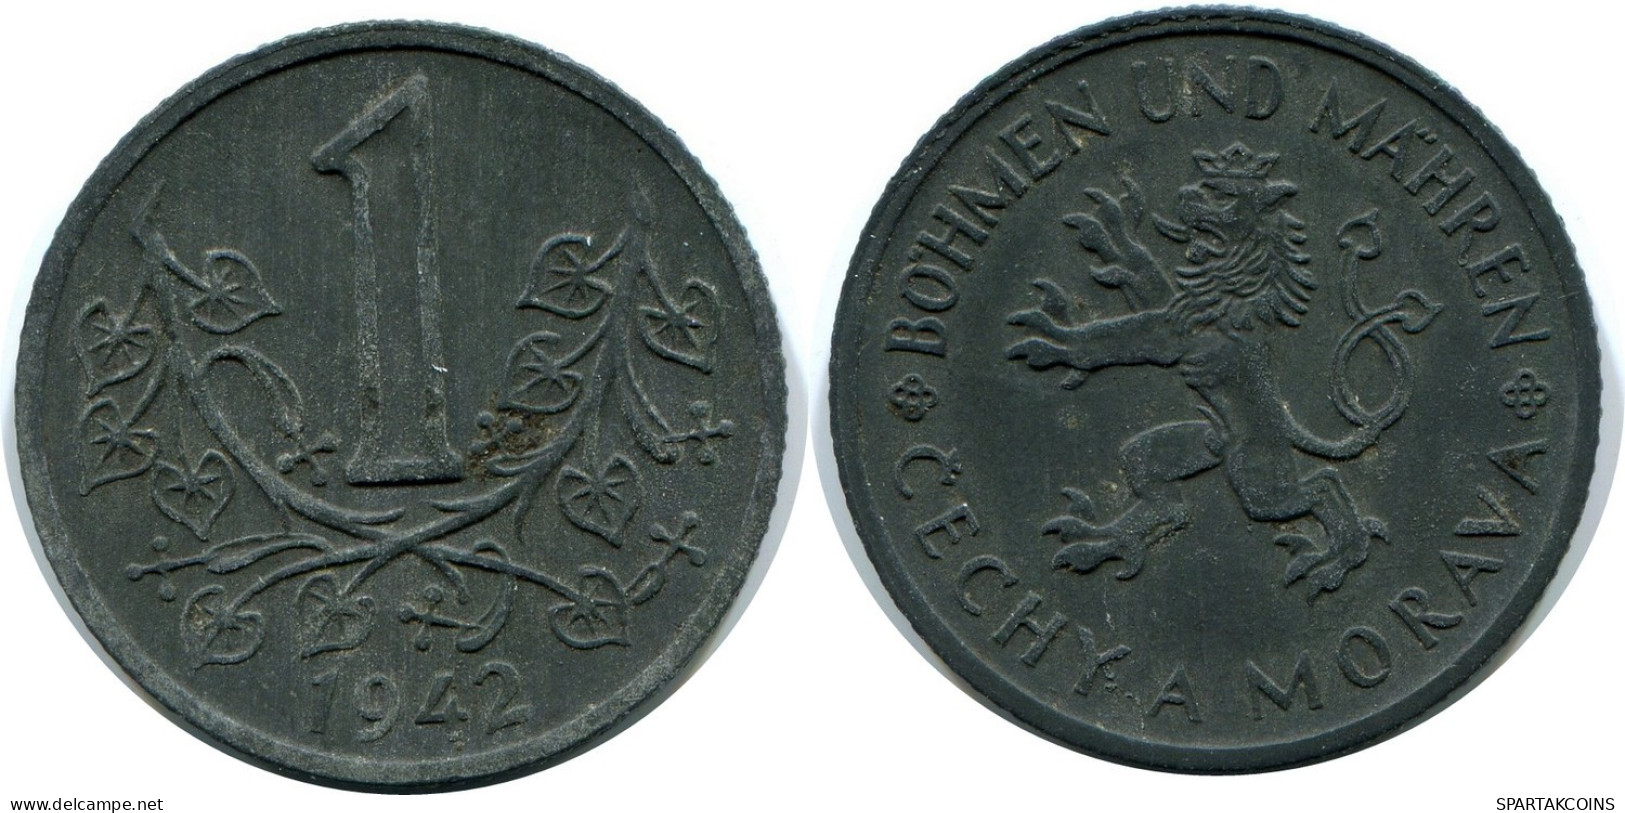 1 KORUNA 1942 BOHEMIA Y MORAVIA REPÚBLICA CHECA CZECH REPUBLIC Moneda #AX375.E.A - Repubblica Ceca